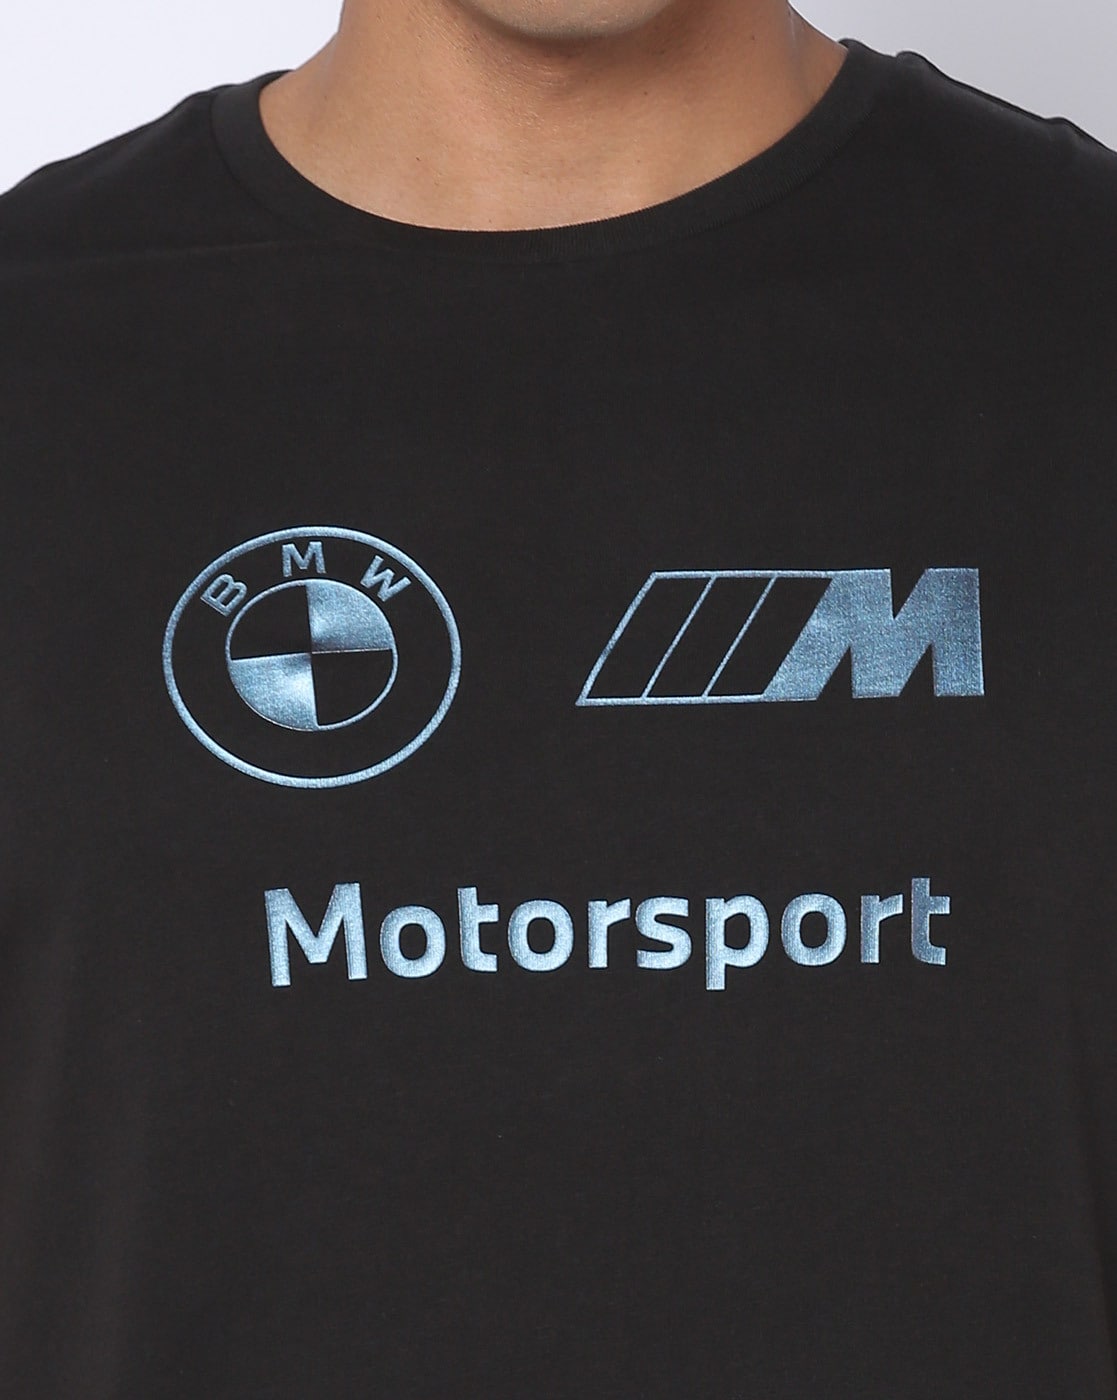 T-shirt BMW M Motorsport Metal Energy Logo Homme